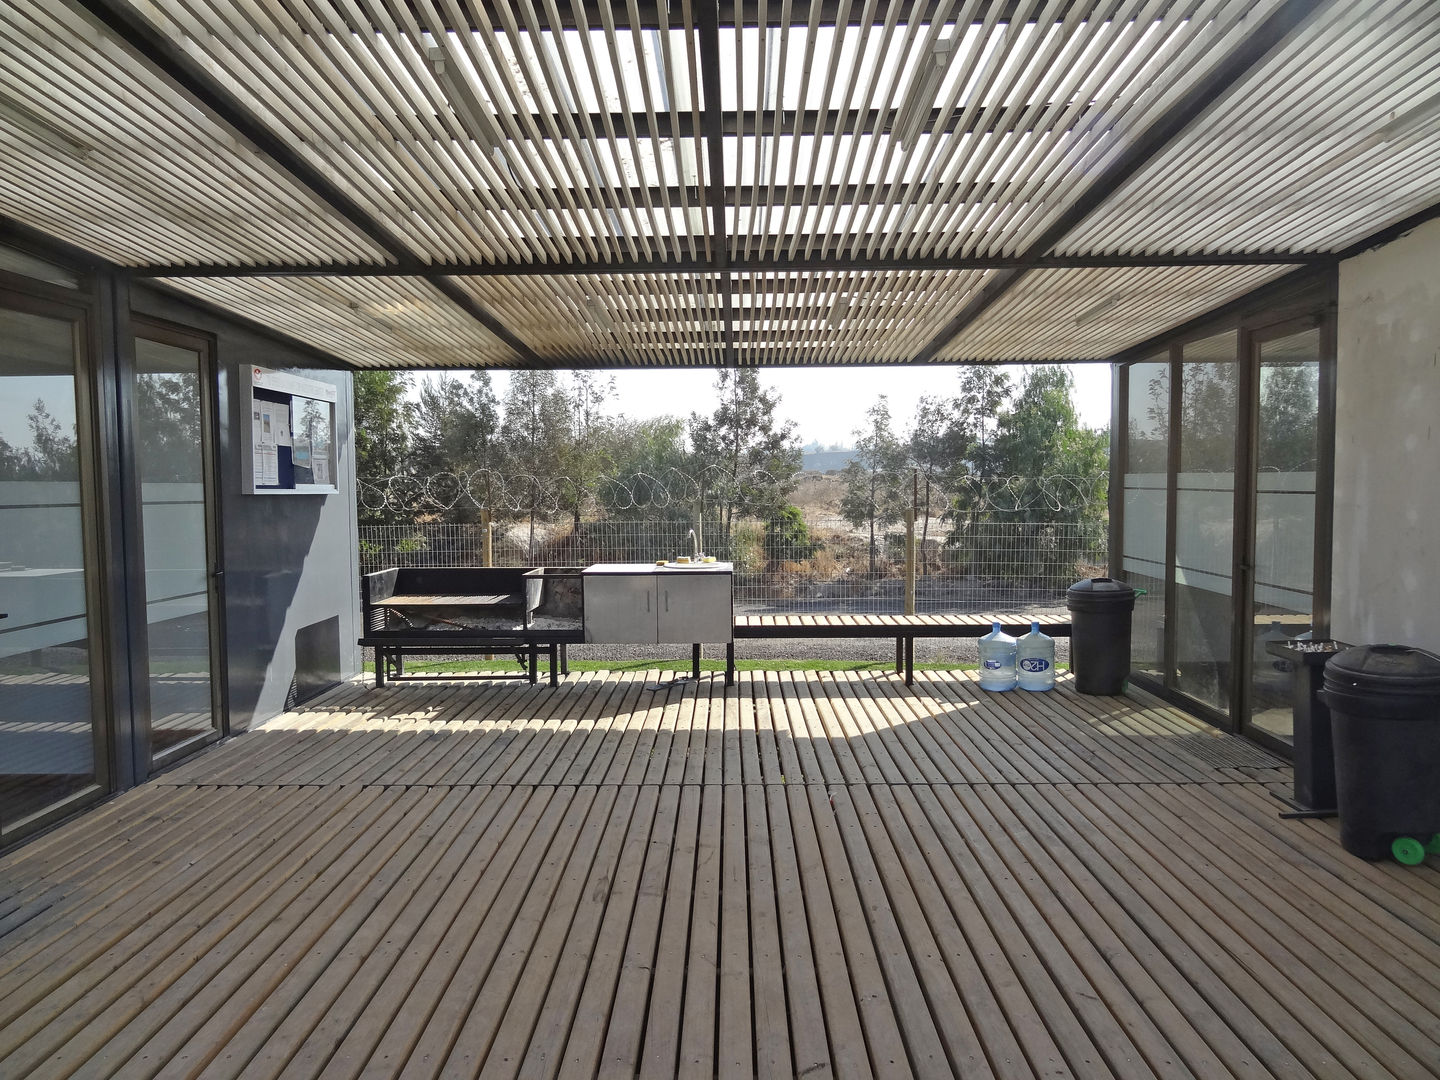 Oficinas Modulares Transportables, m2 estudio arquitectos - Santiago m2 estudio arquitectos - Santiago Escadas